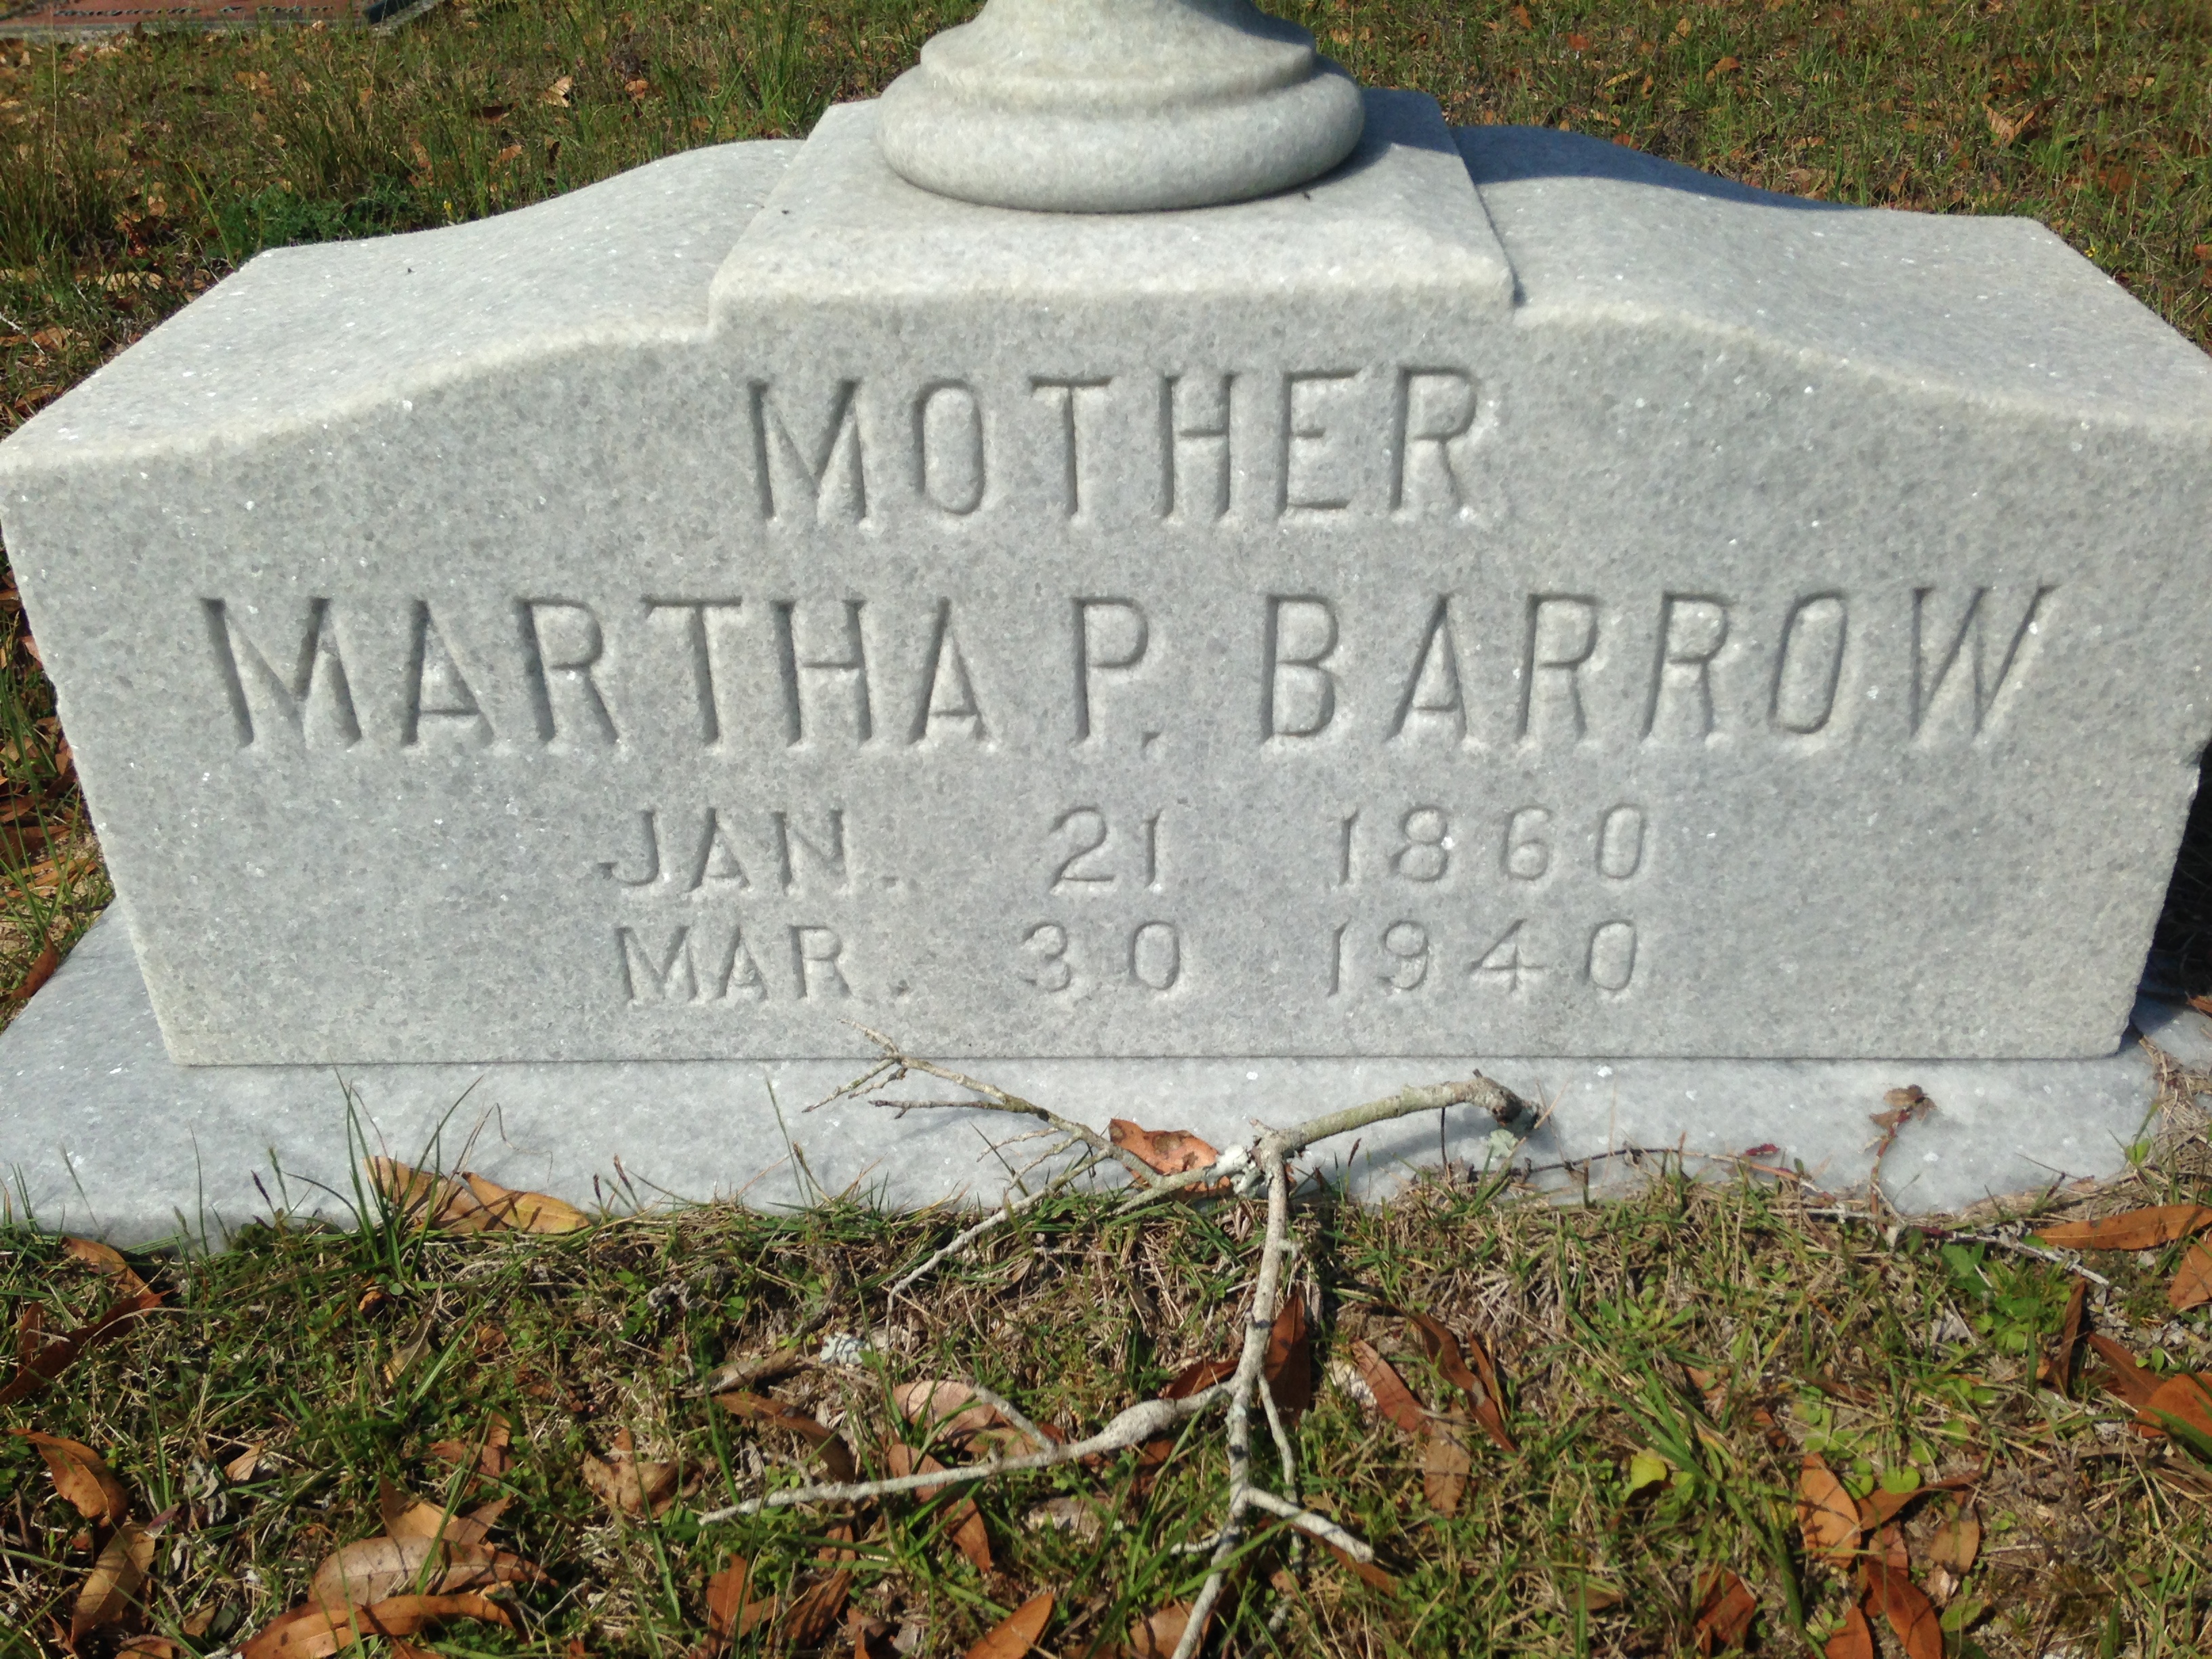 Martha P. Barrow